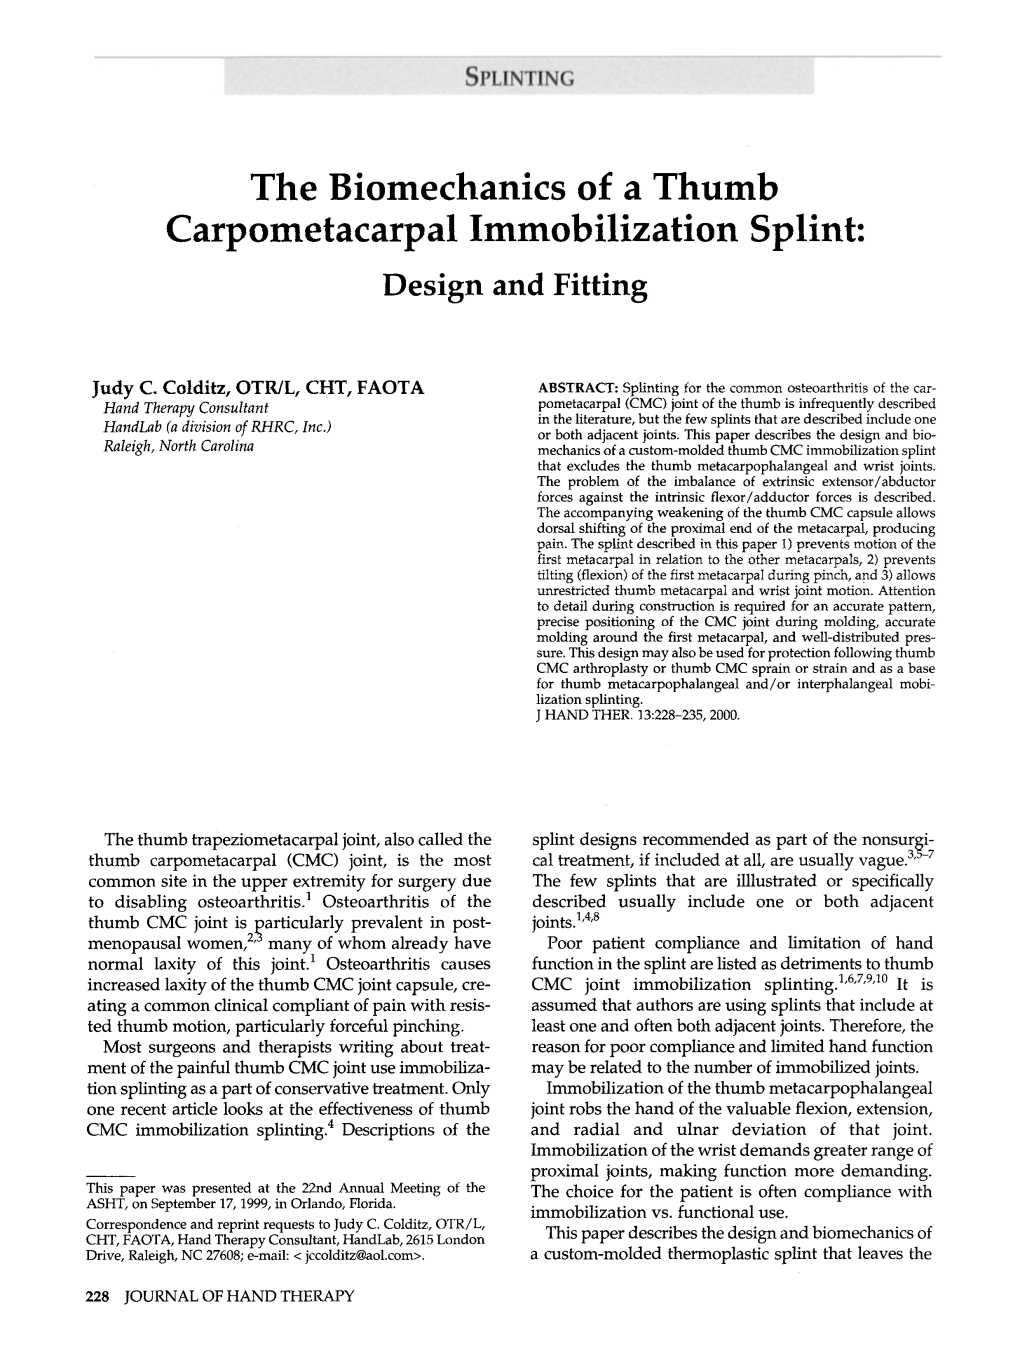 The Biomechanics of a Thumb Carpometacarpal Immobilization Splint: Design and Fitting